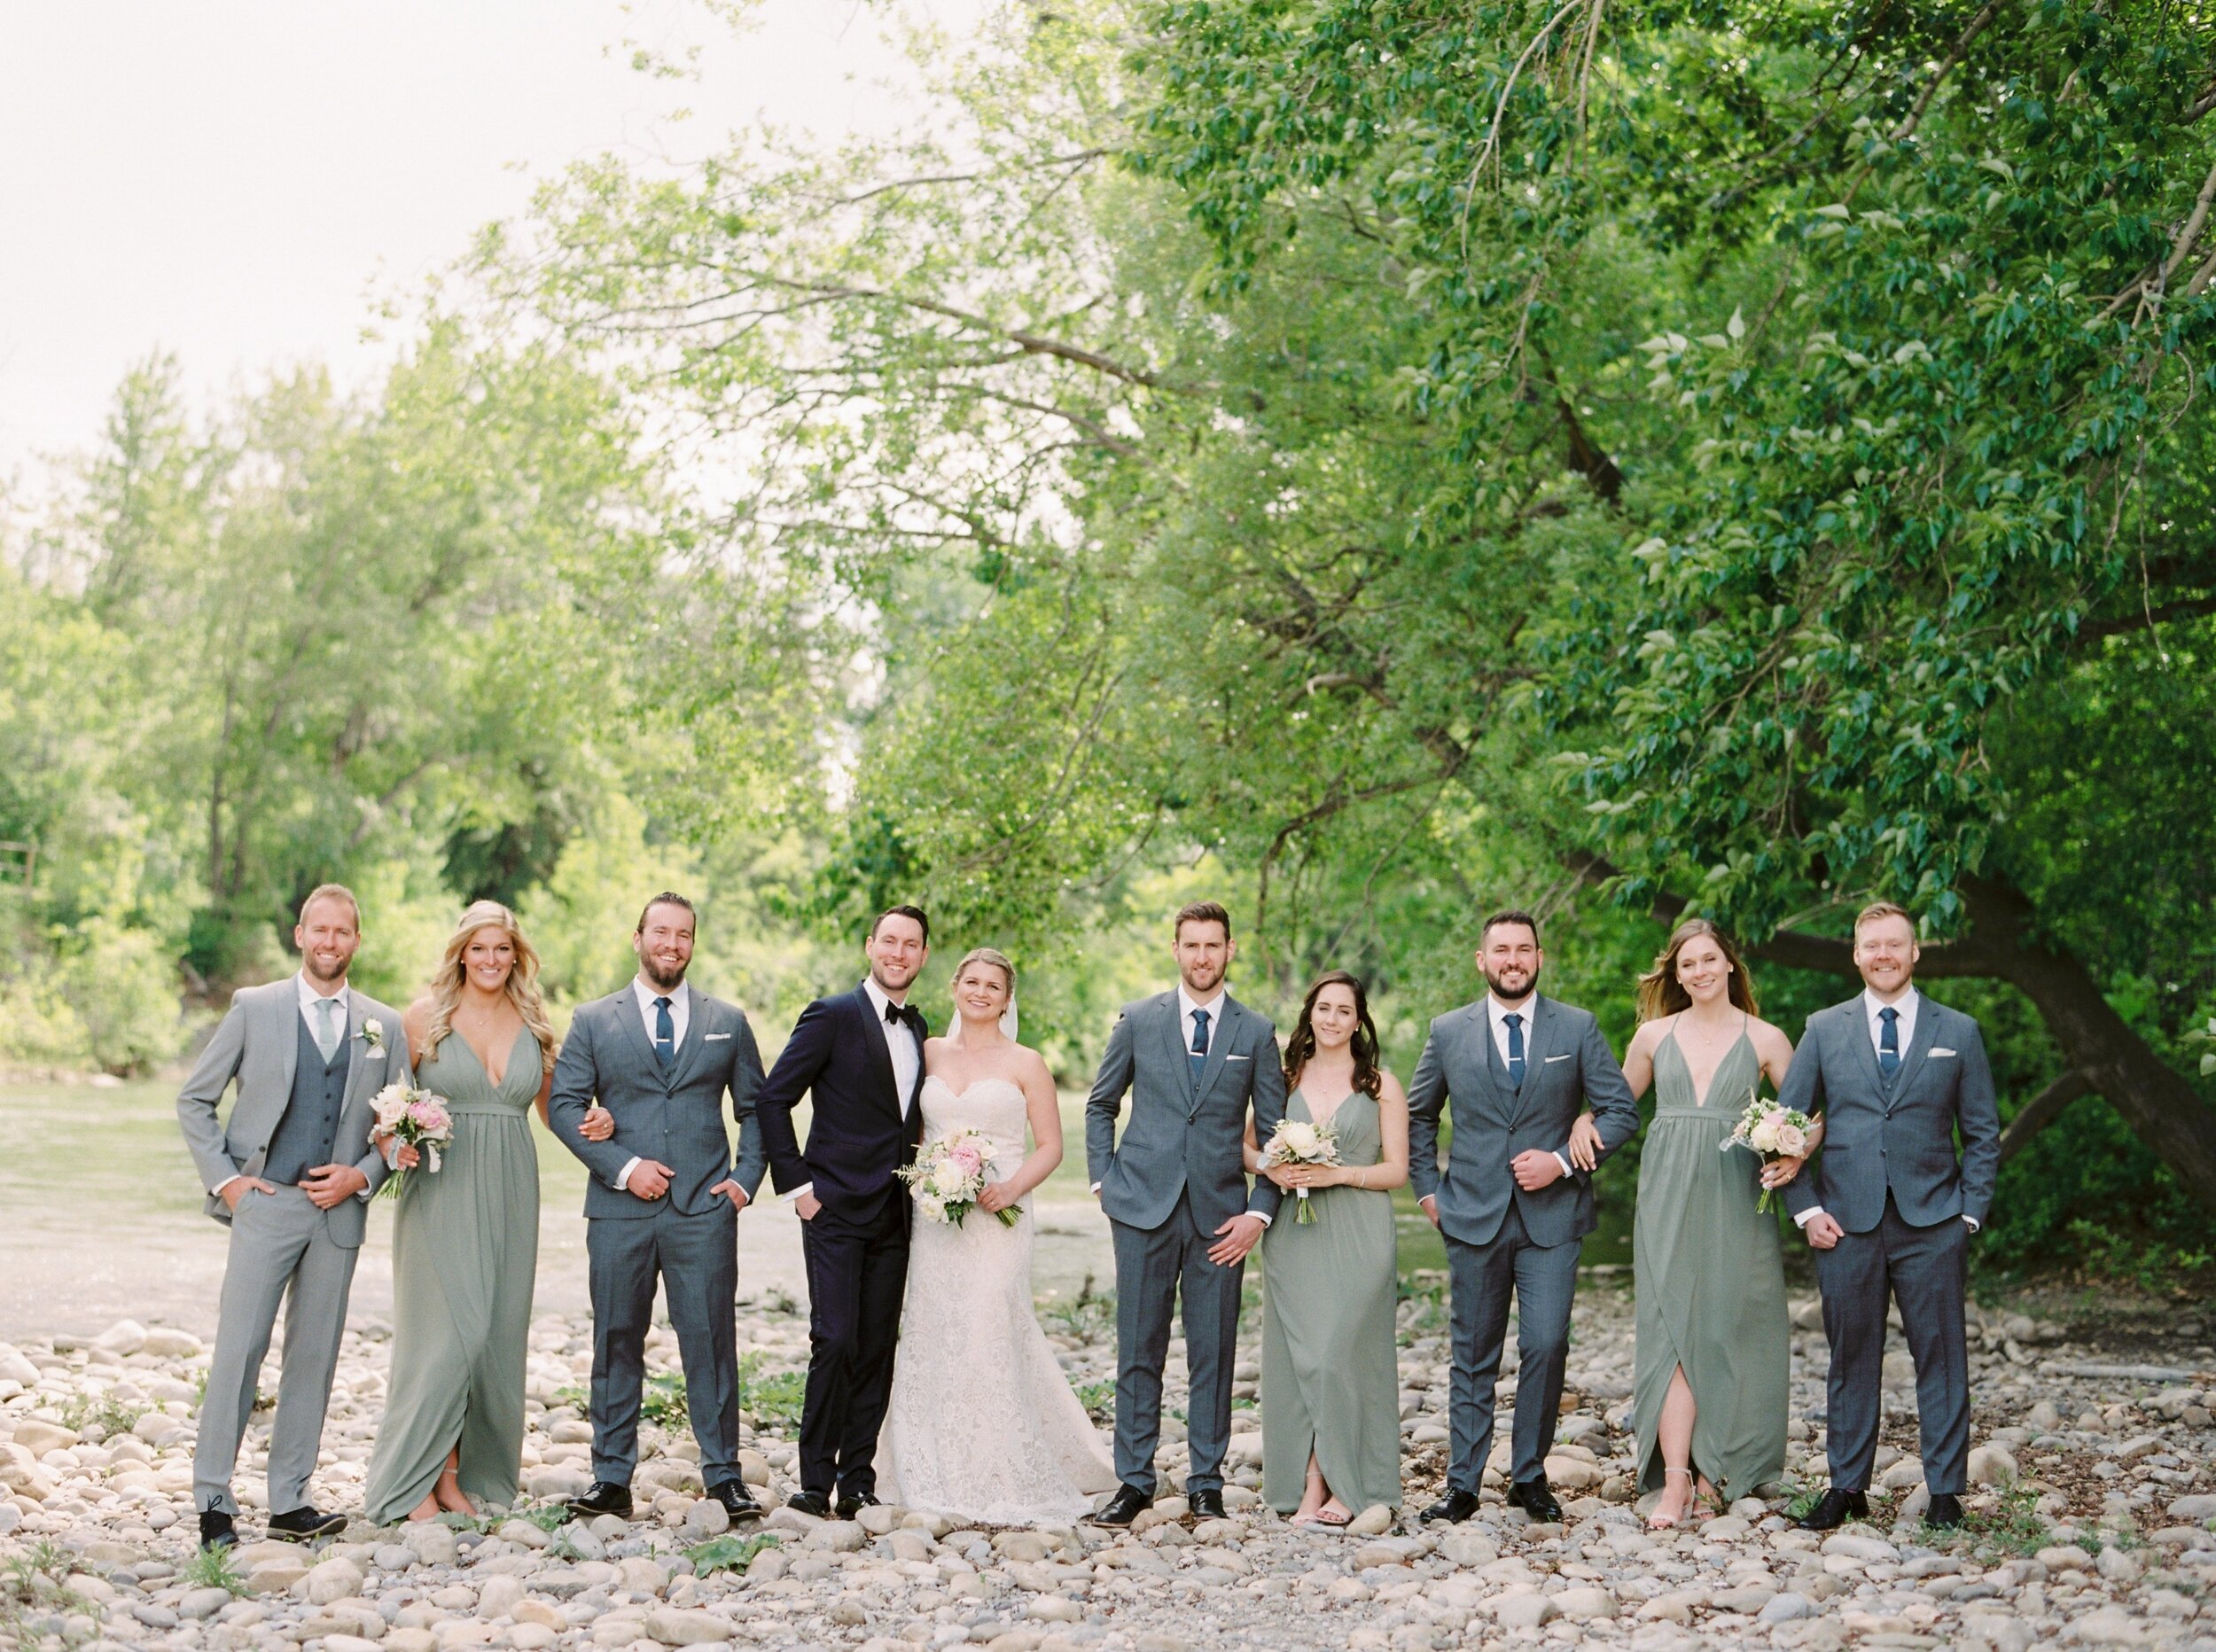  sage green and soft grey bridal party attire | Deane House Wedding | Calgary photographer | fine art film photography Justine Milton 